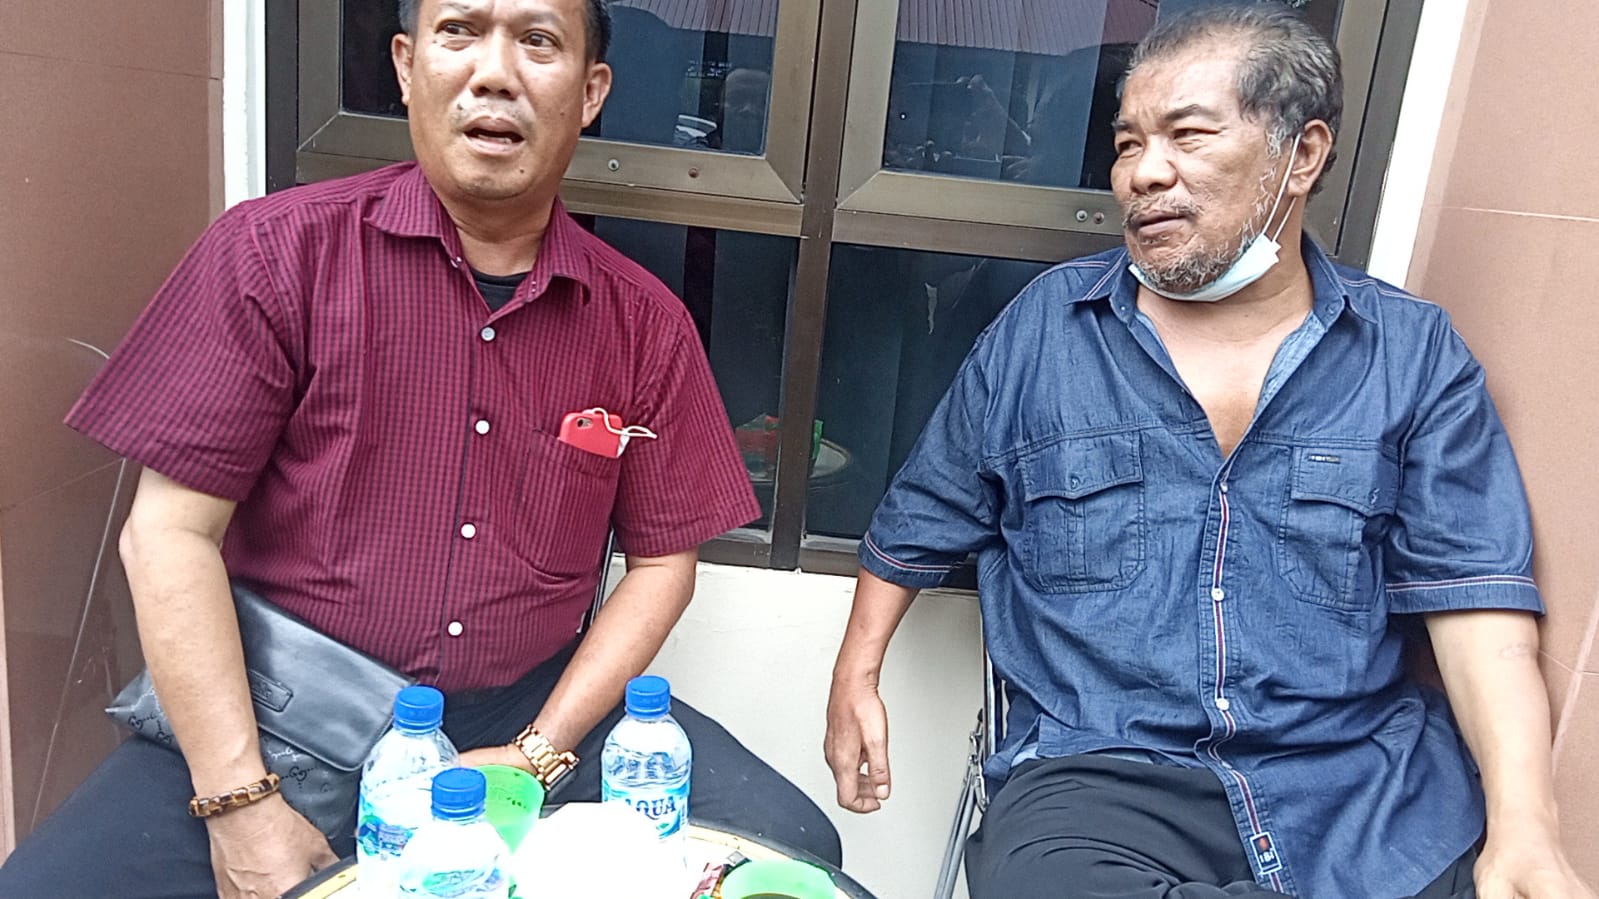 JPU Tuntut Terdakwa Okor Ginting 3 Bulan Penjara, Okor Ginting Optimis Vonis Bebas